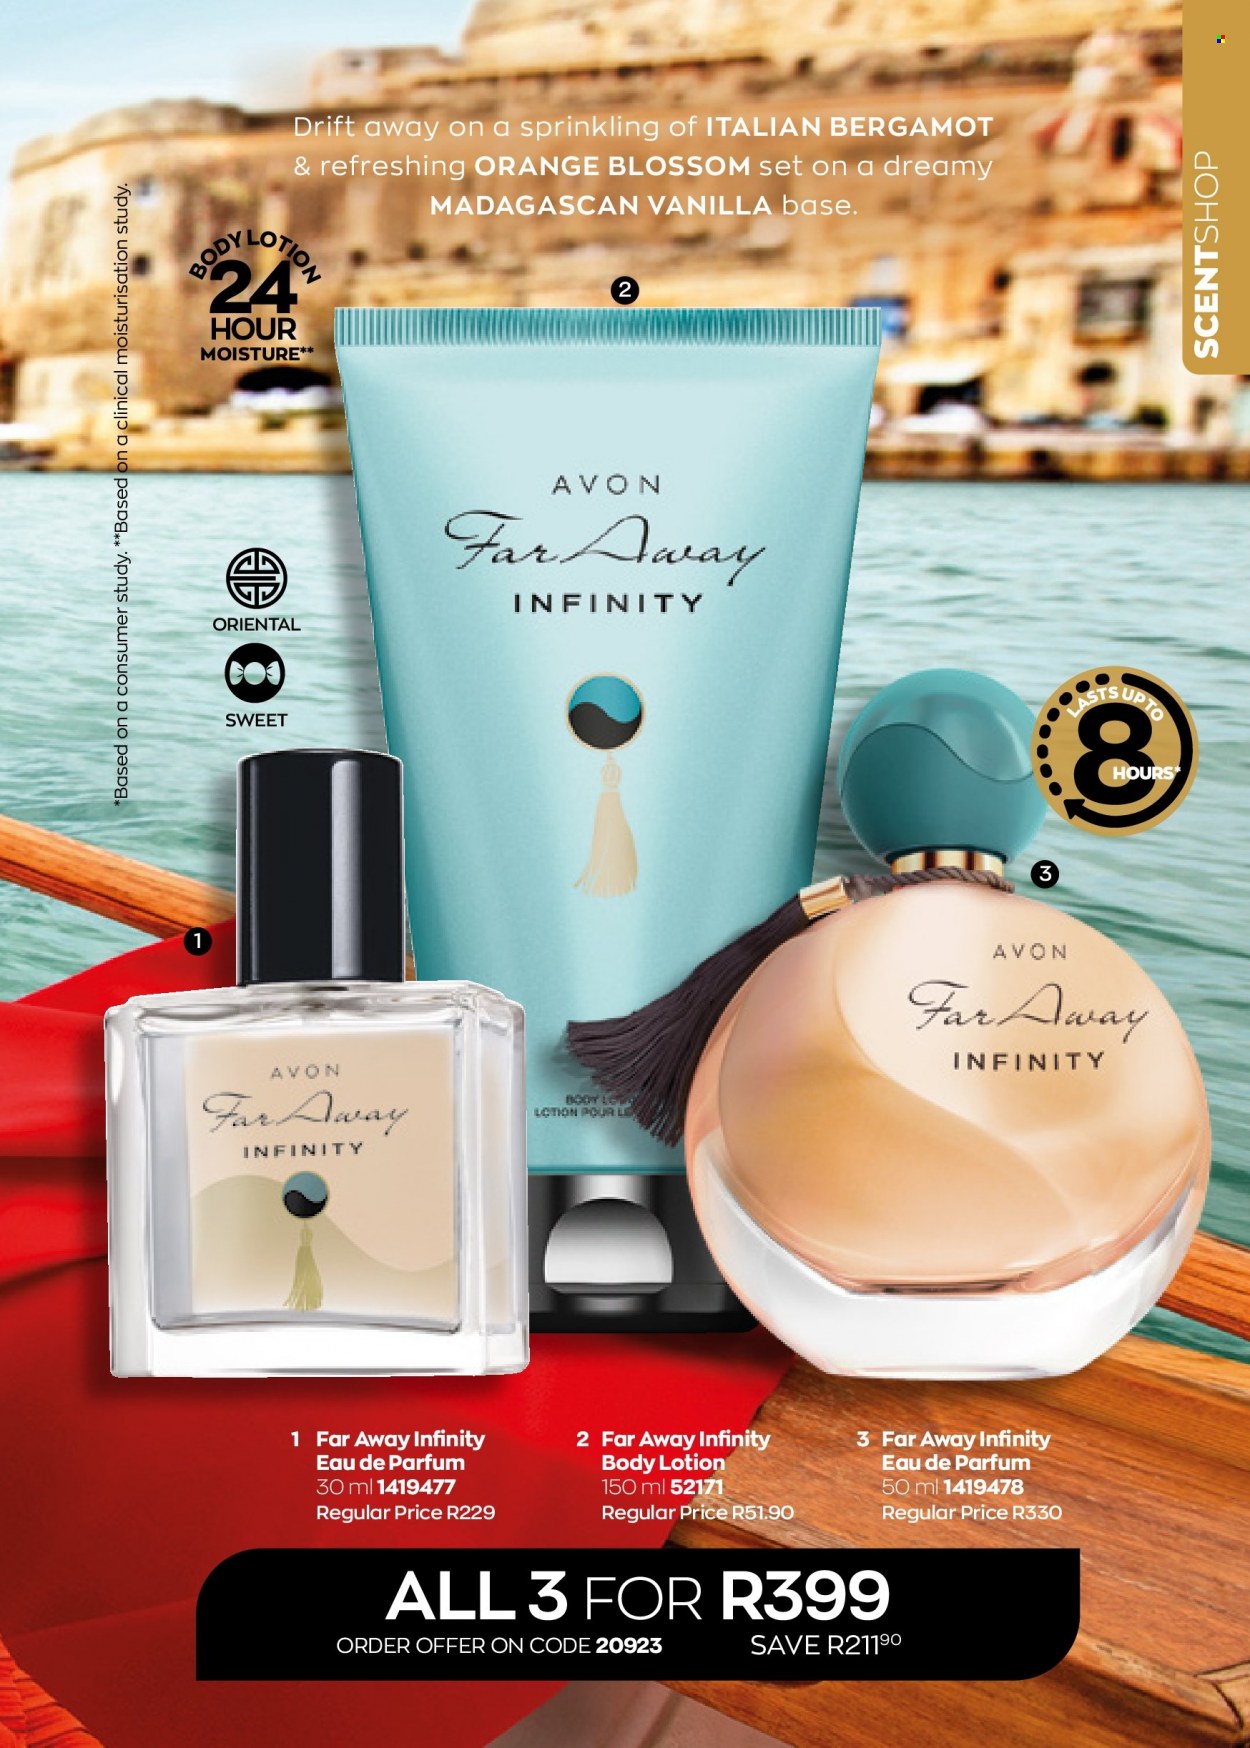 thumbnail - Avon catalogue  - 01/08/2022 - 31/08/2022 - Sales products - Avon, Infinity, body lotion, eau de parfum, far away. Page 21.